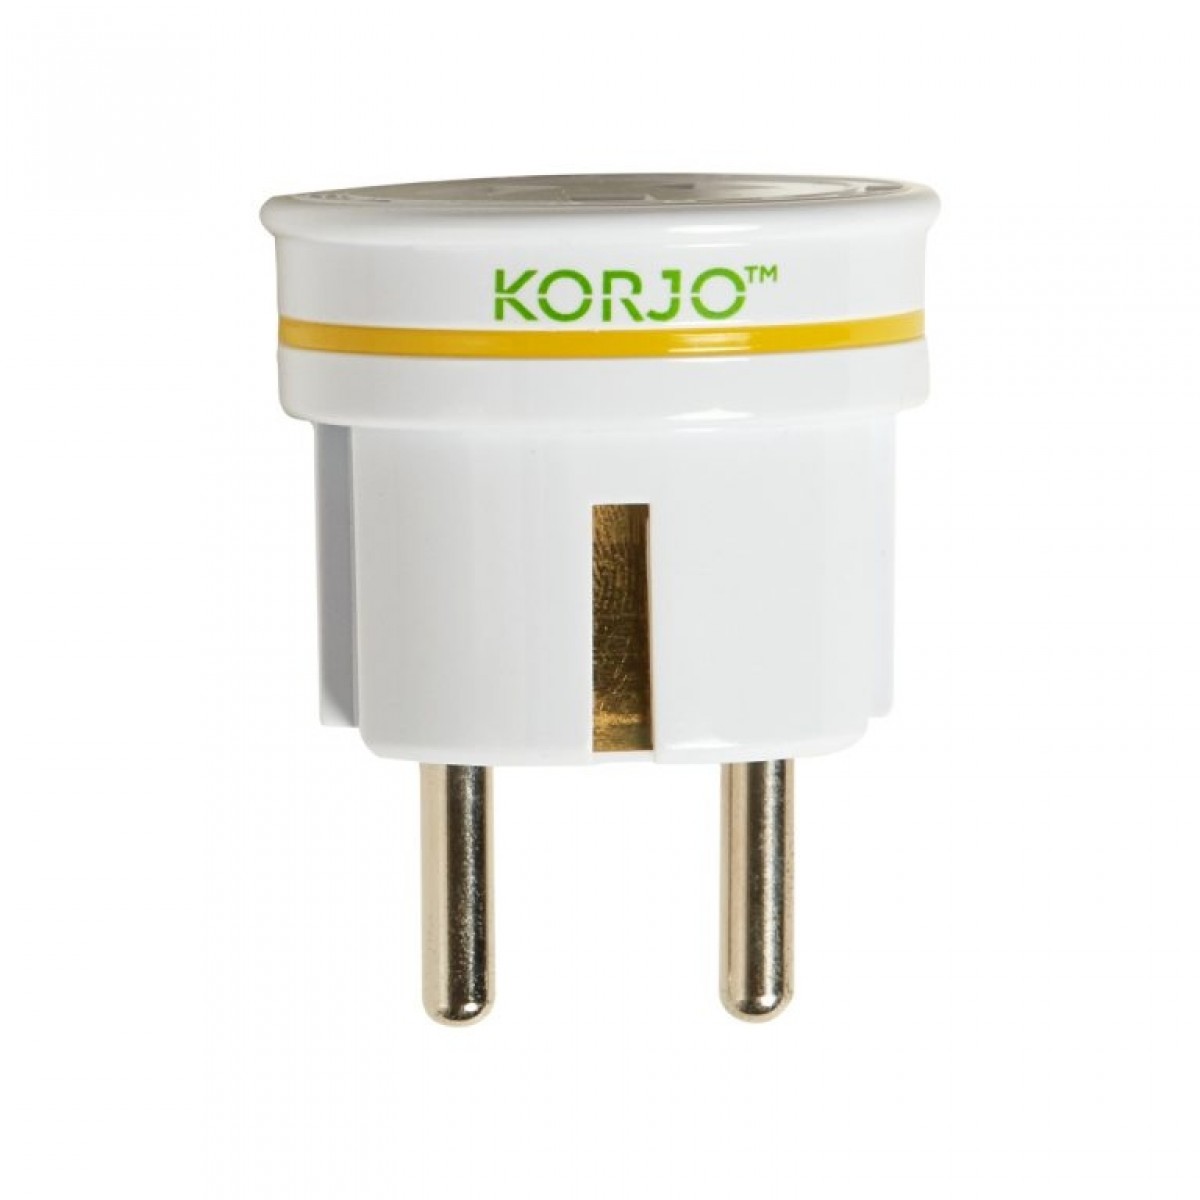 korjo travel adapter guide